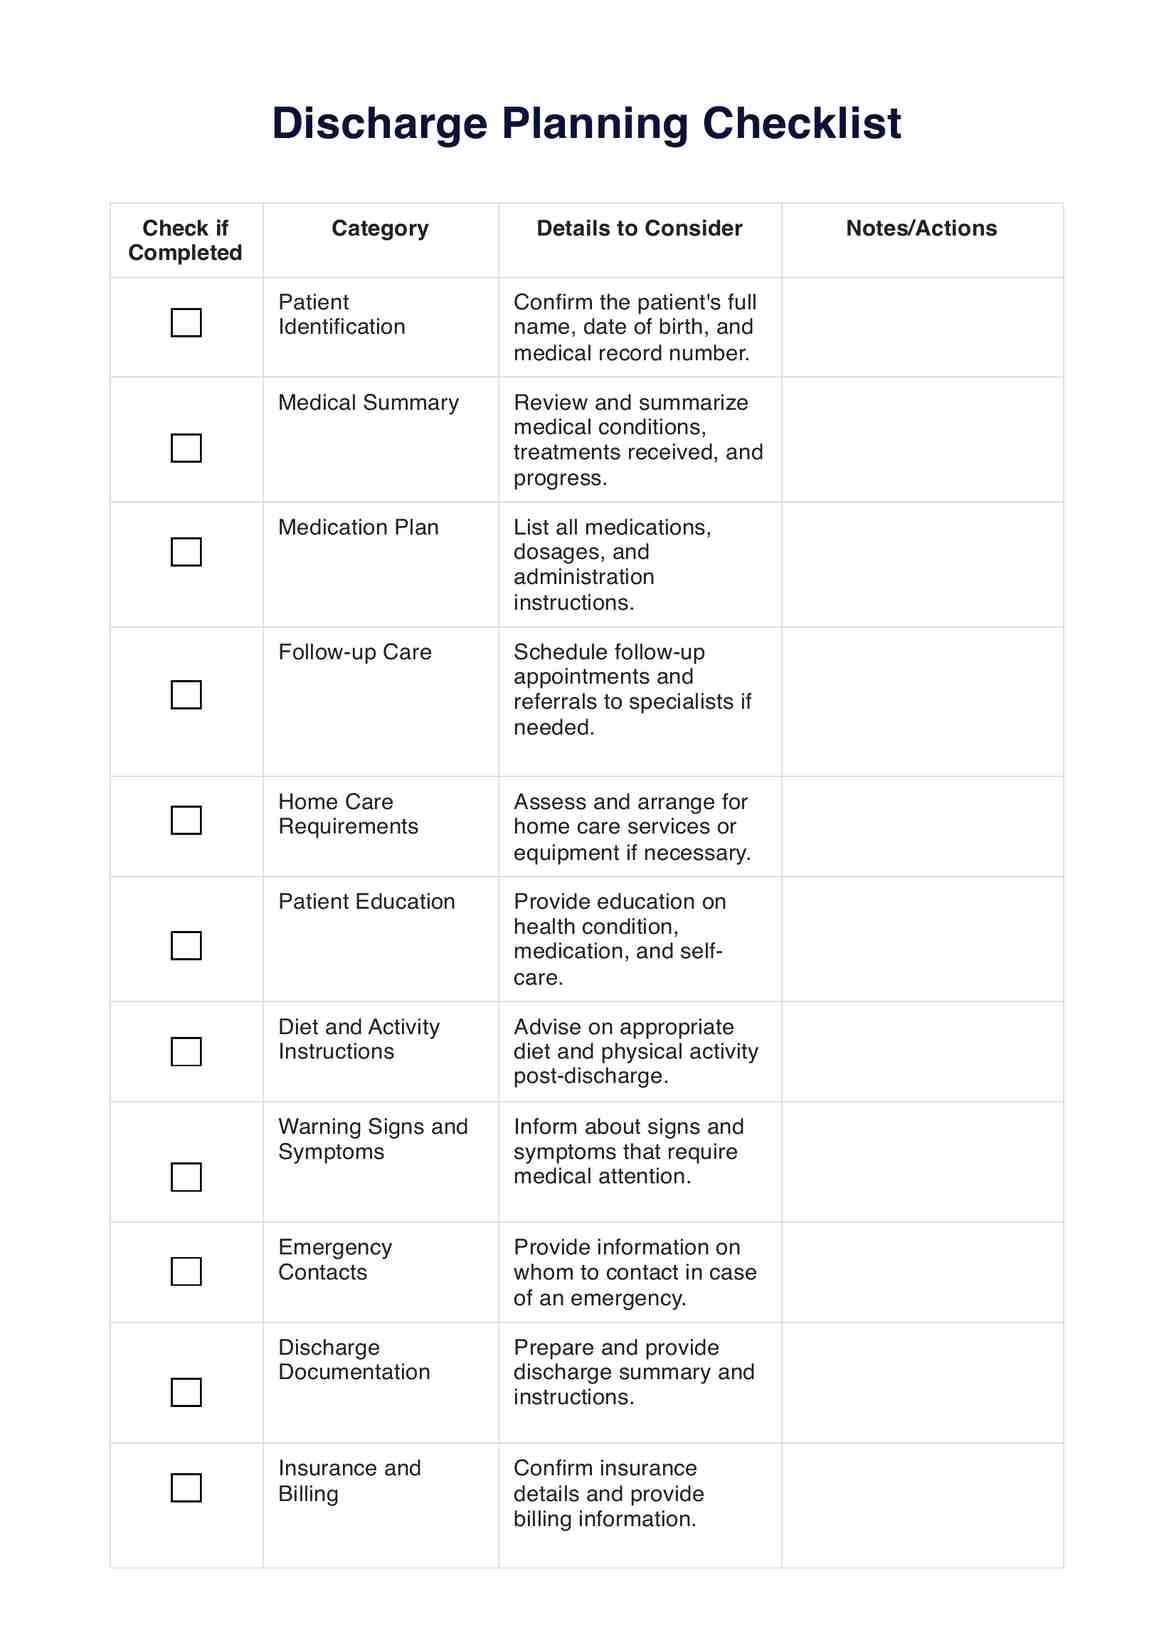 Discharge Planning Checklist PDF Example